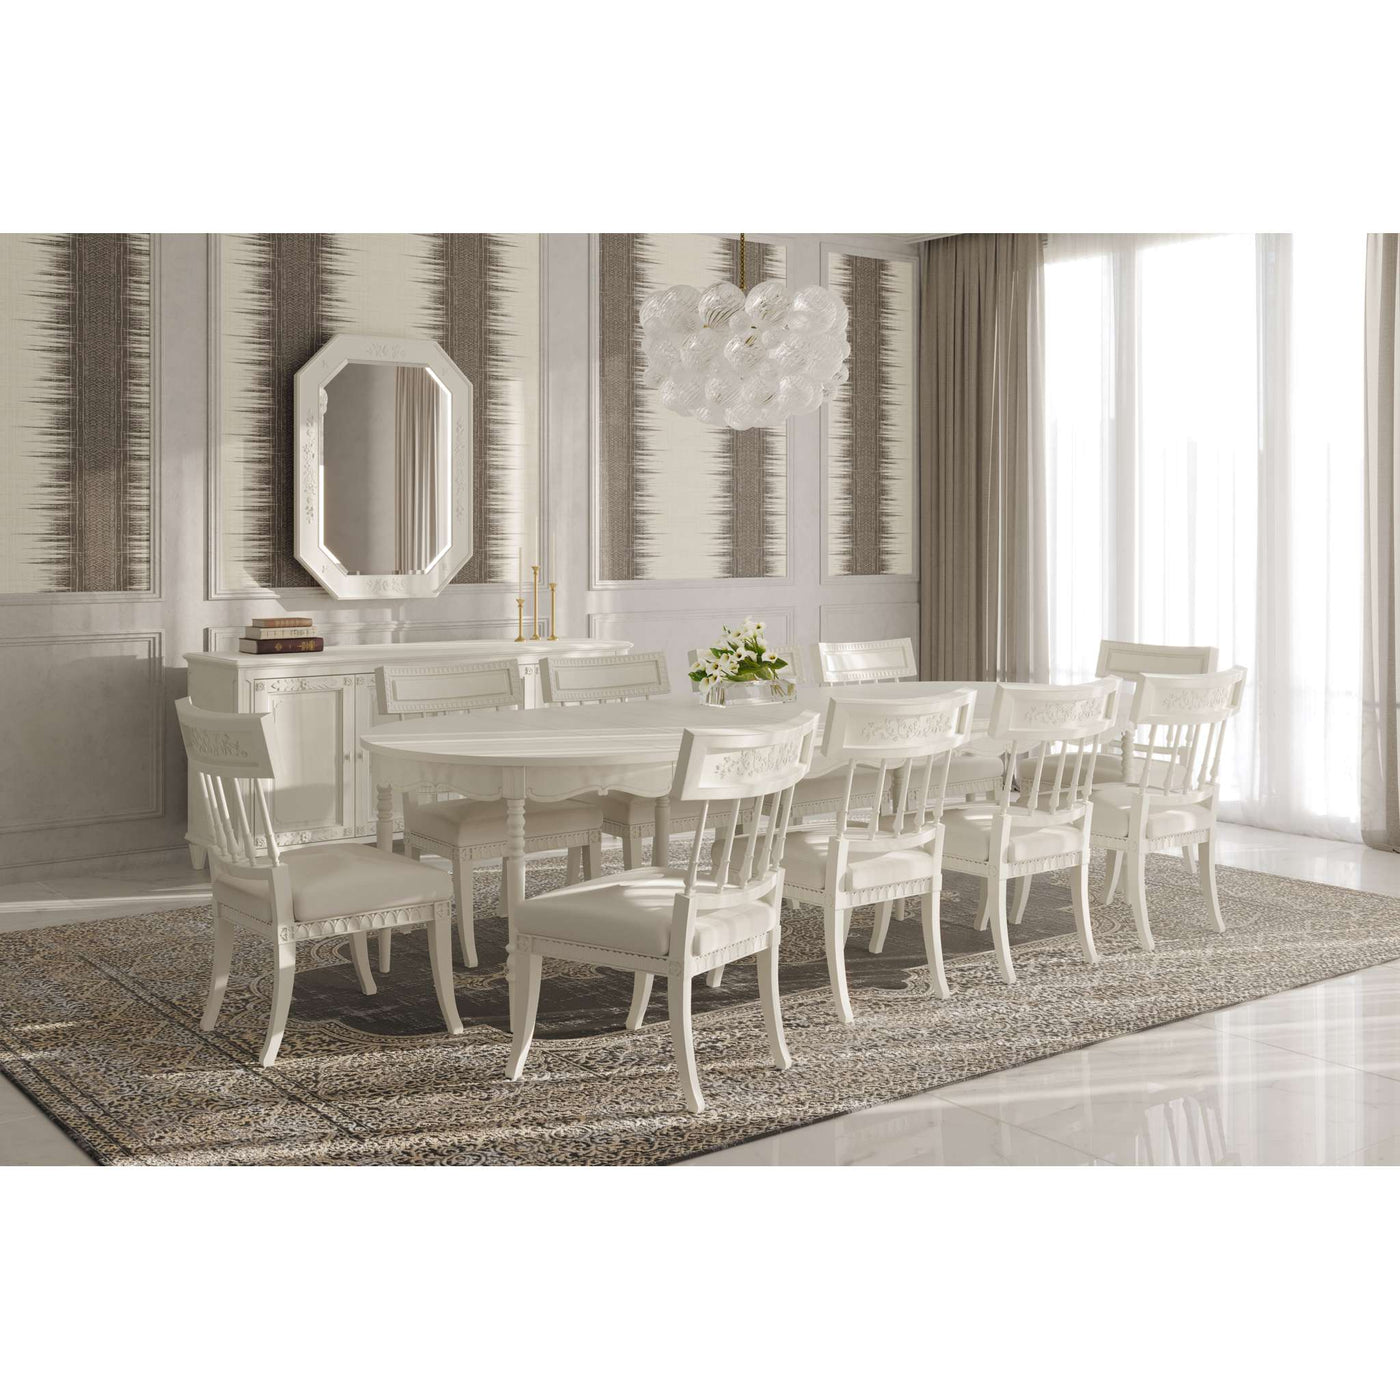 White Lenticular Dining Table